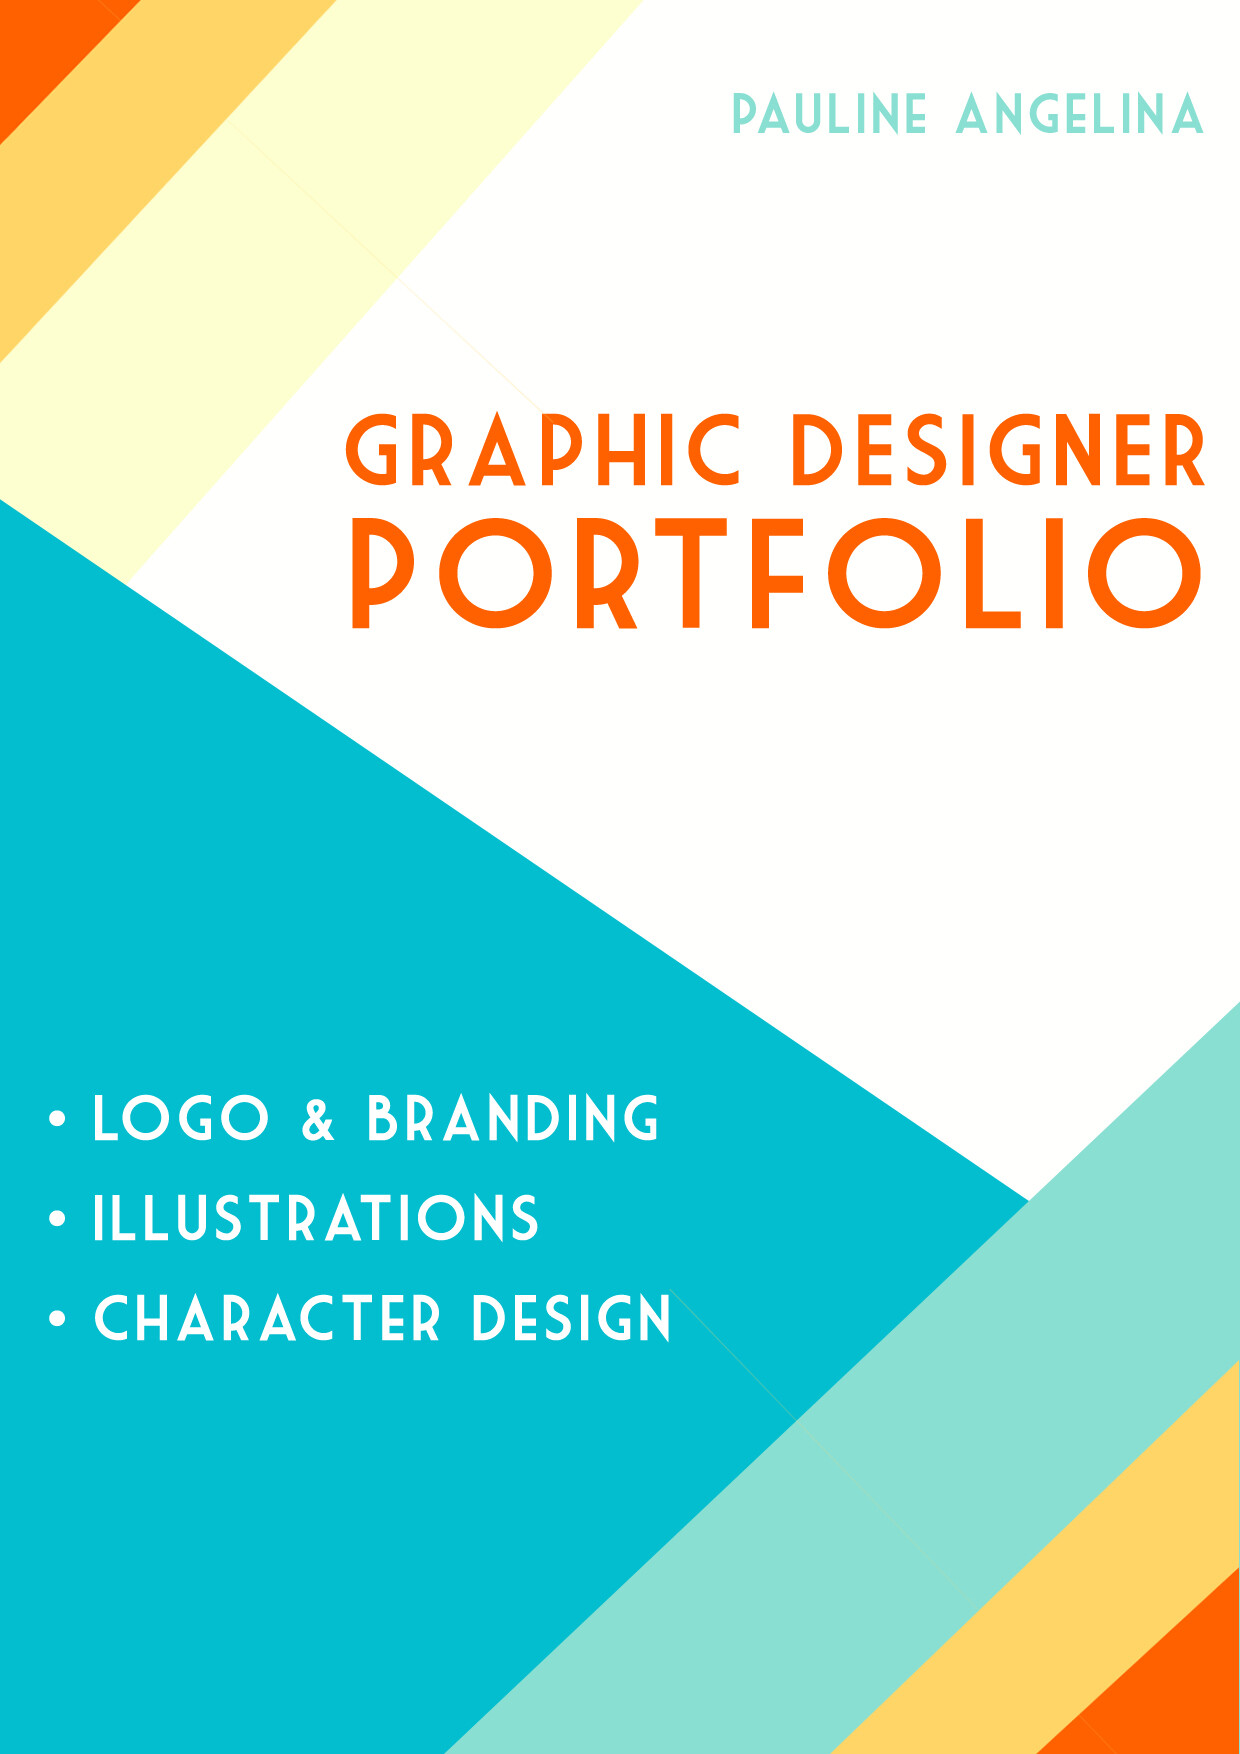 professional portfolio cover page design